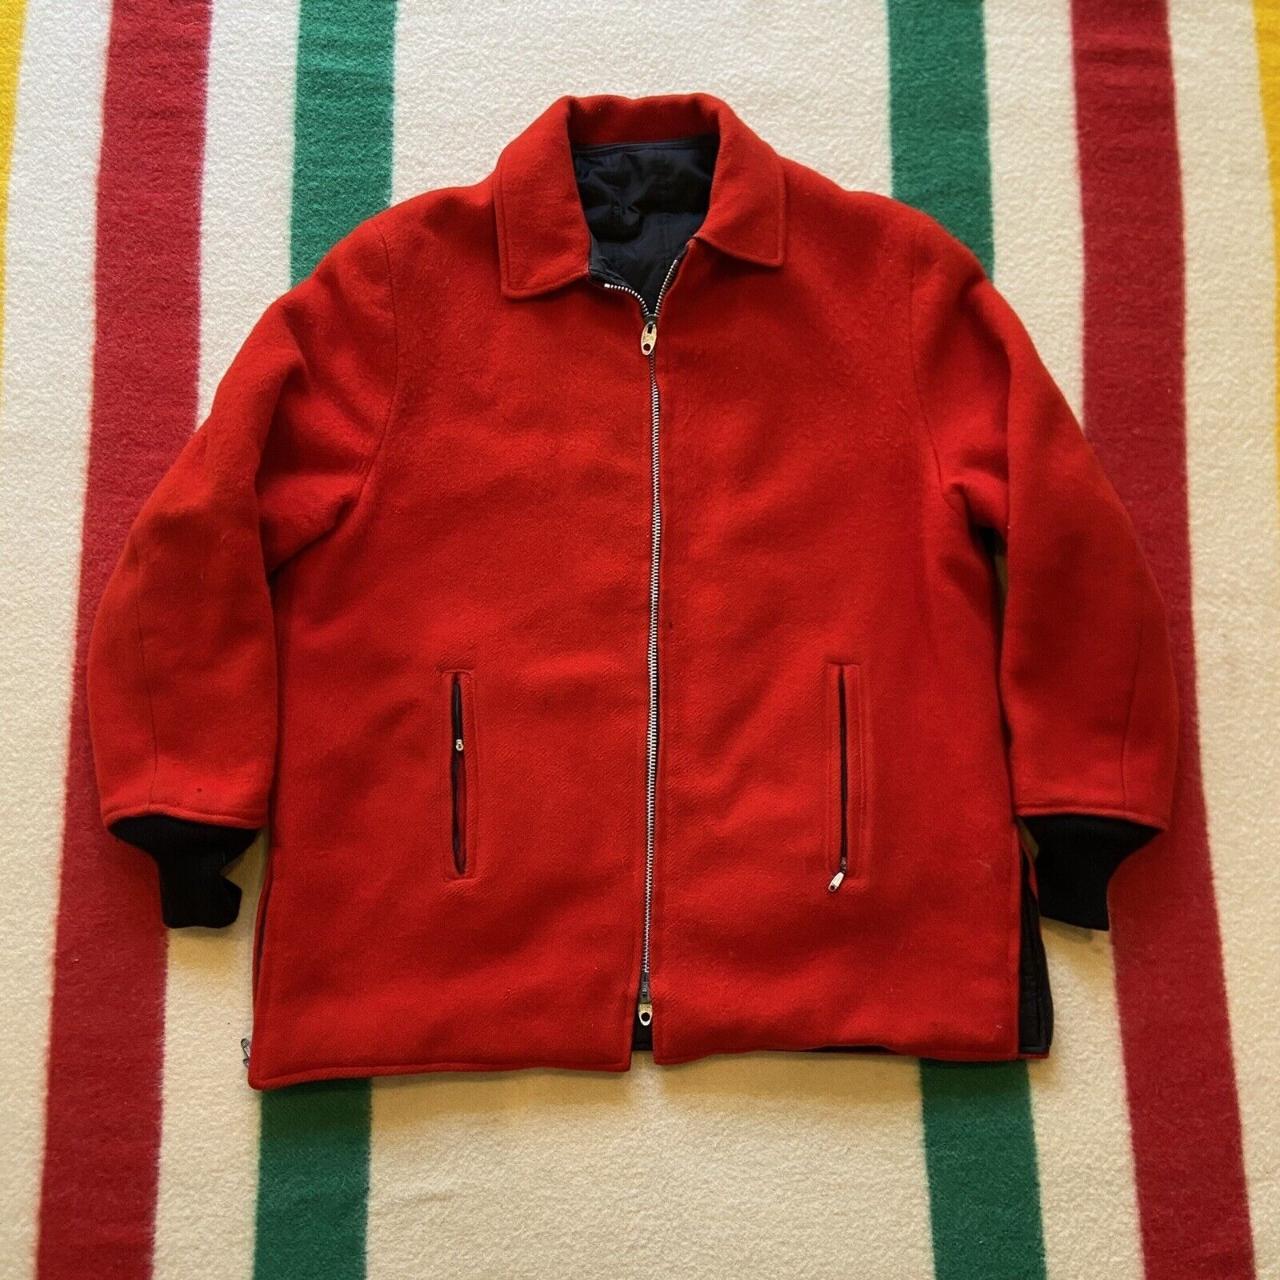 American Vintage Men's Red and Black Coat